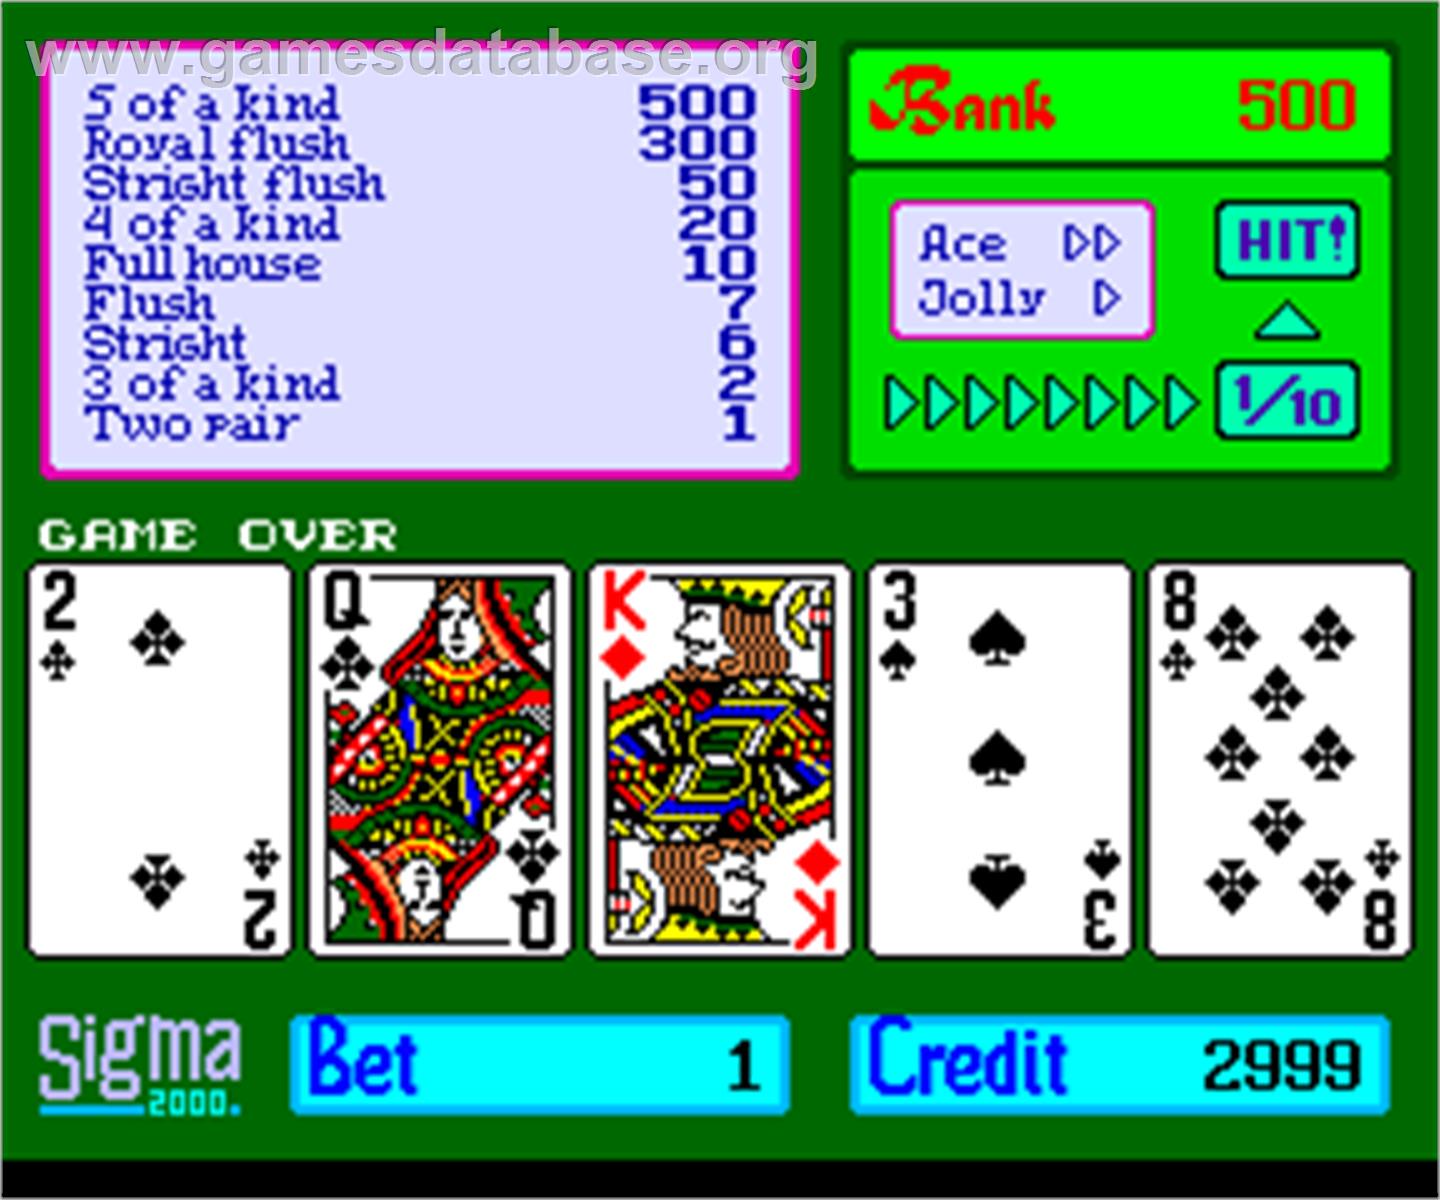 Sigma Poker 2000 - Arcade - Artwork - Game Over Screen